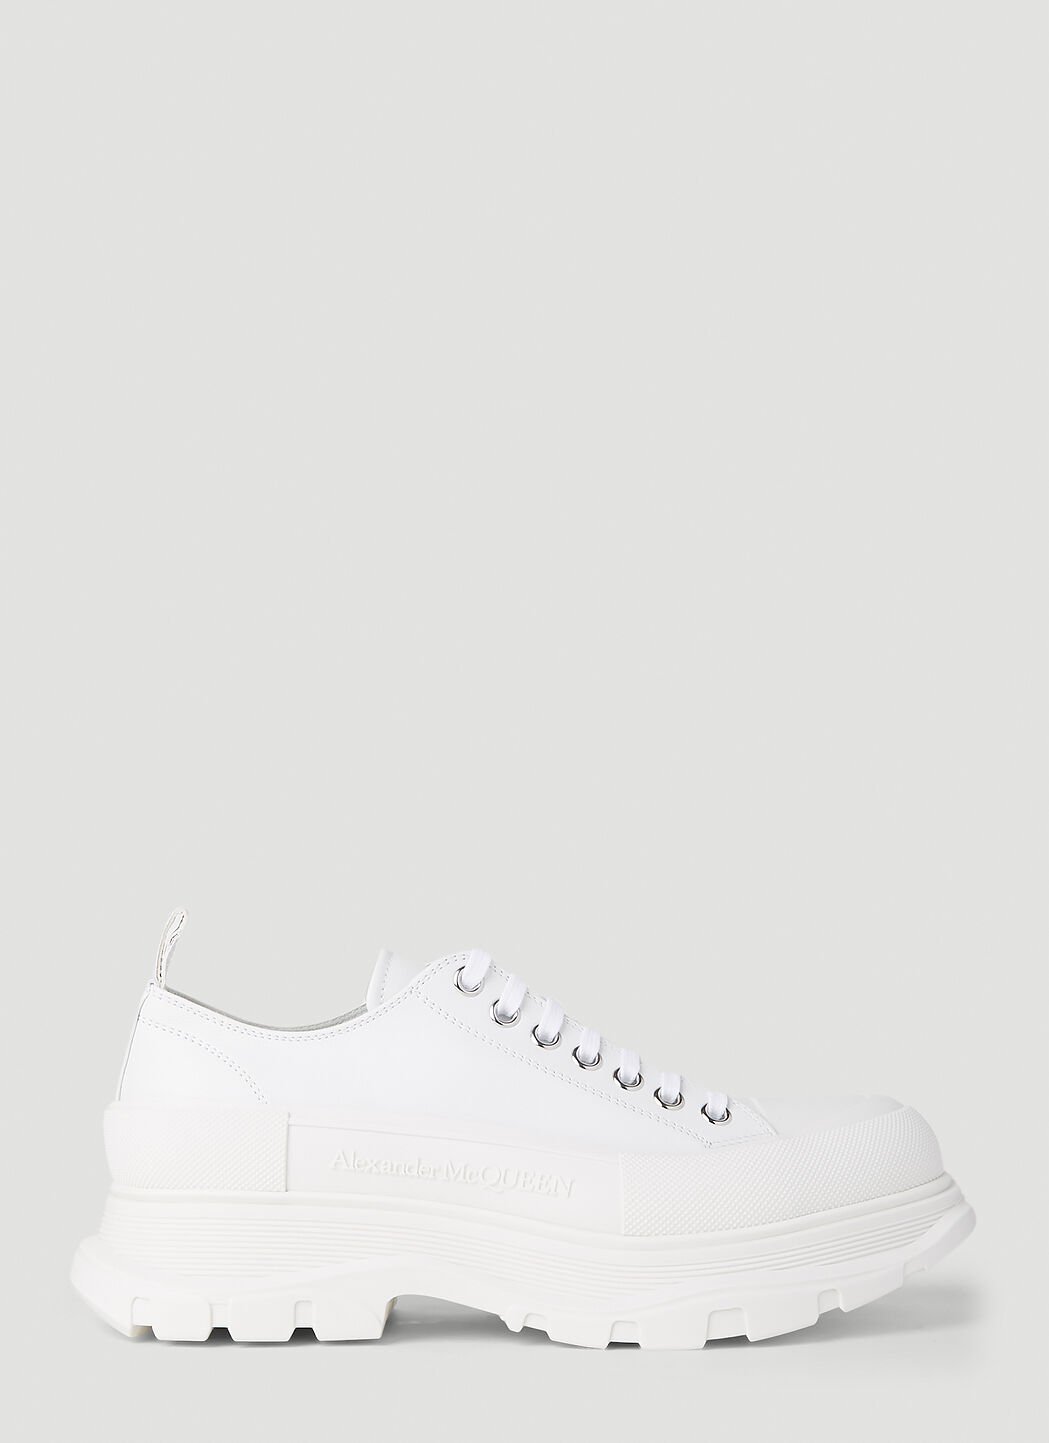 Alexander McQueen Tread Slick Sneakers White amq0149025